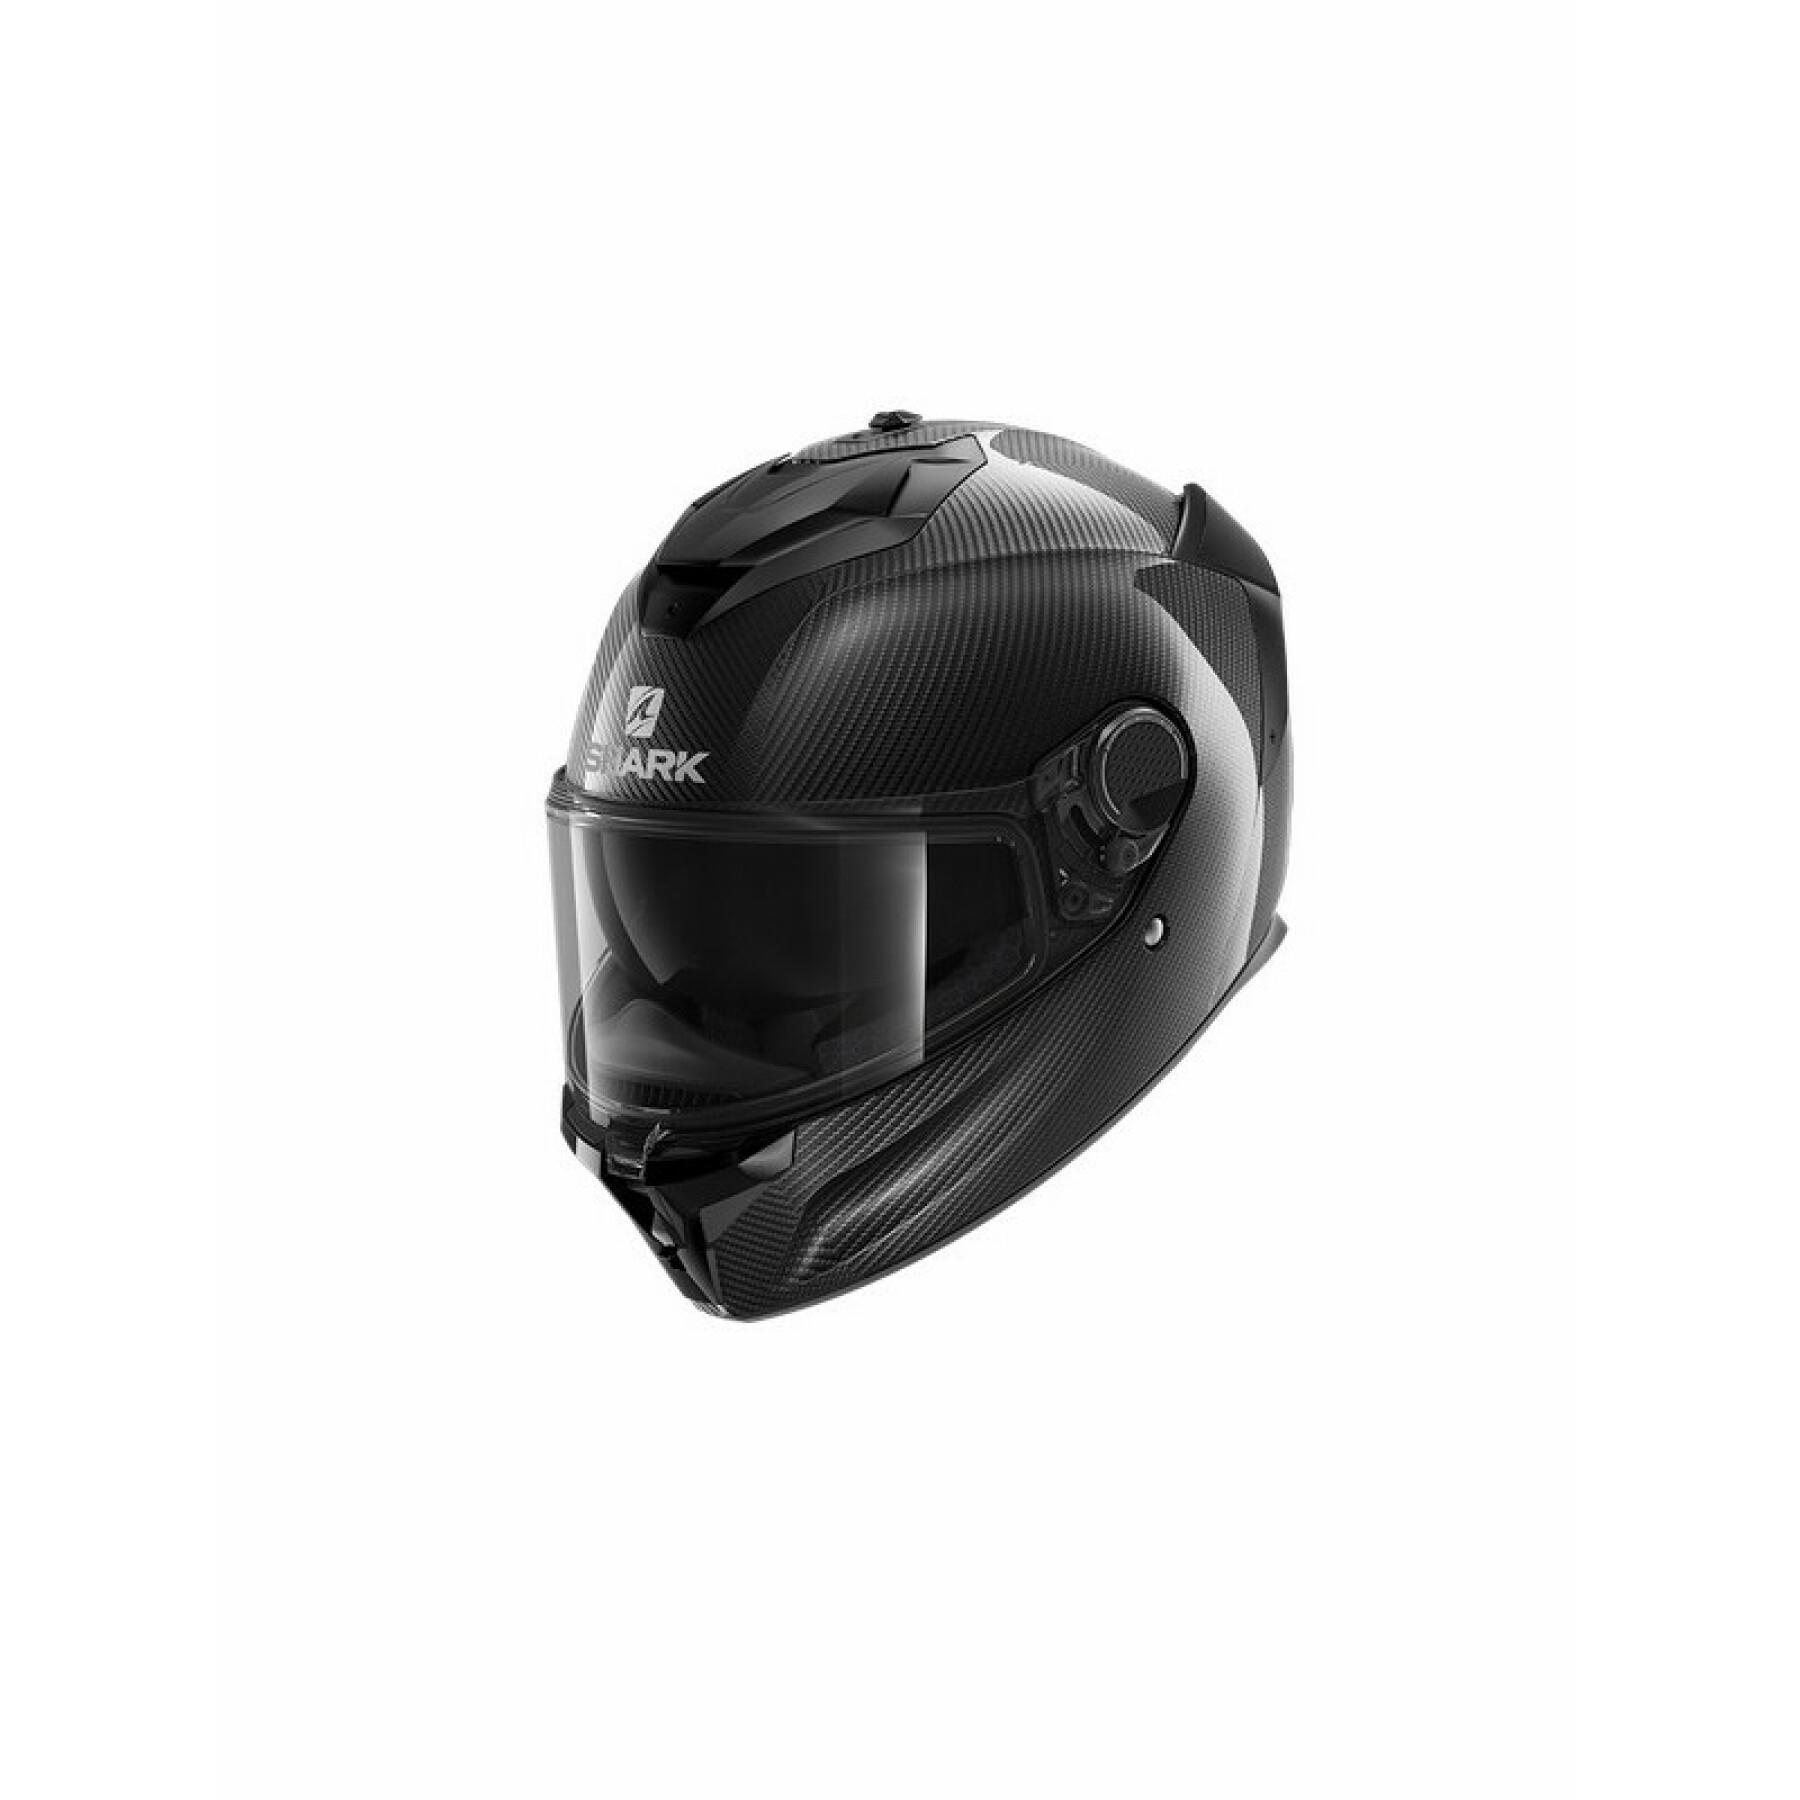 Full face motorcycle helmet Shark spartan GT carbon skin